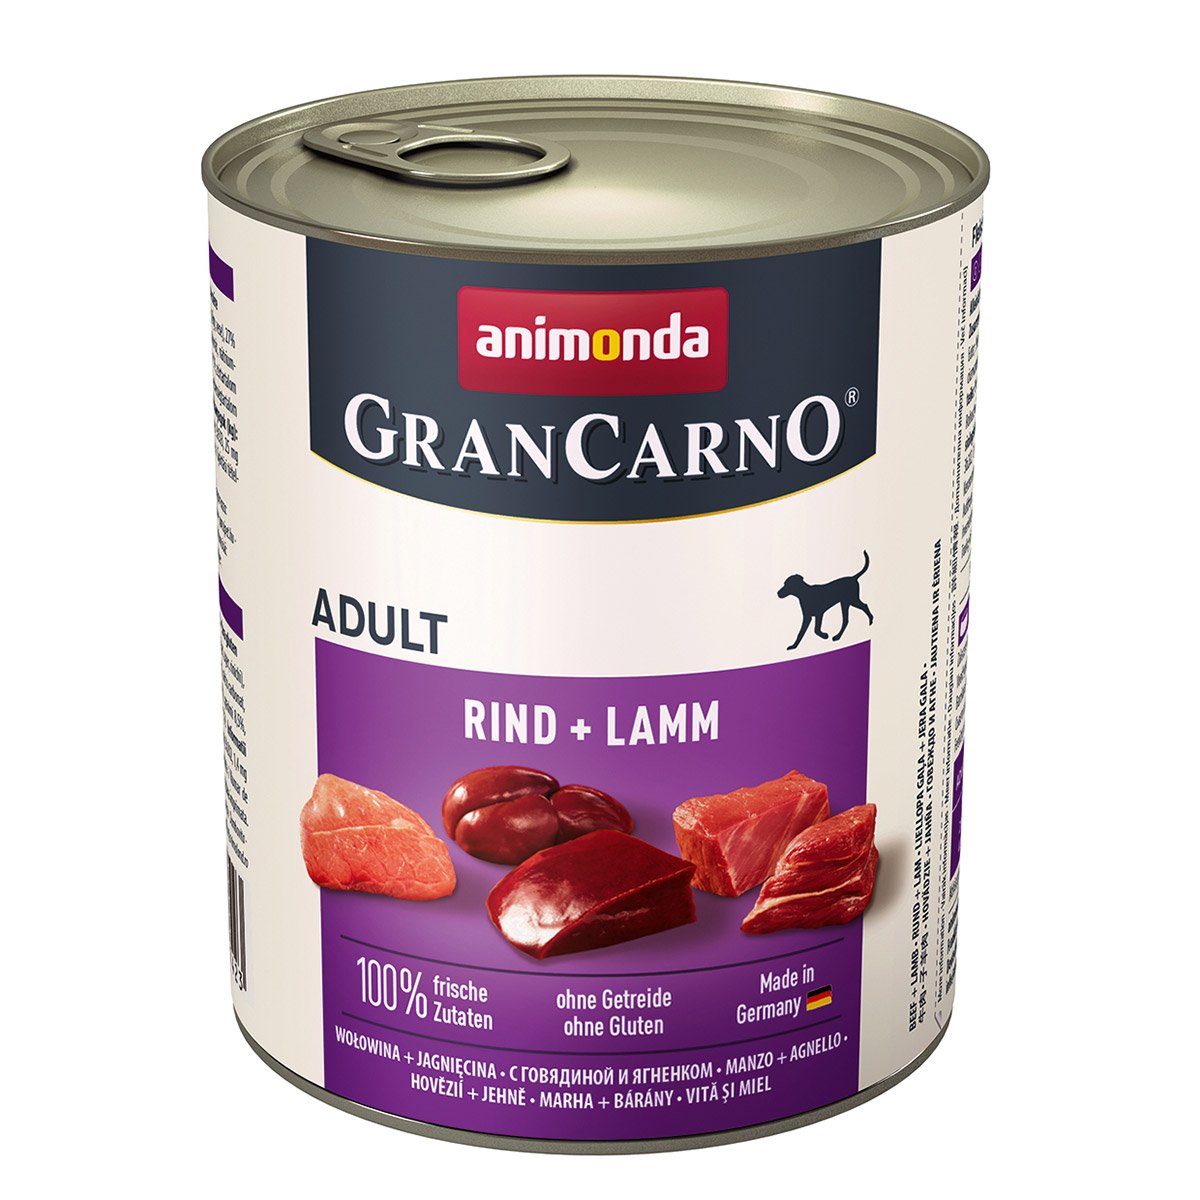 animonda GranCarno Rind und Lamm 6x800g von Animonda